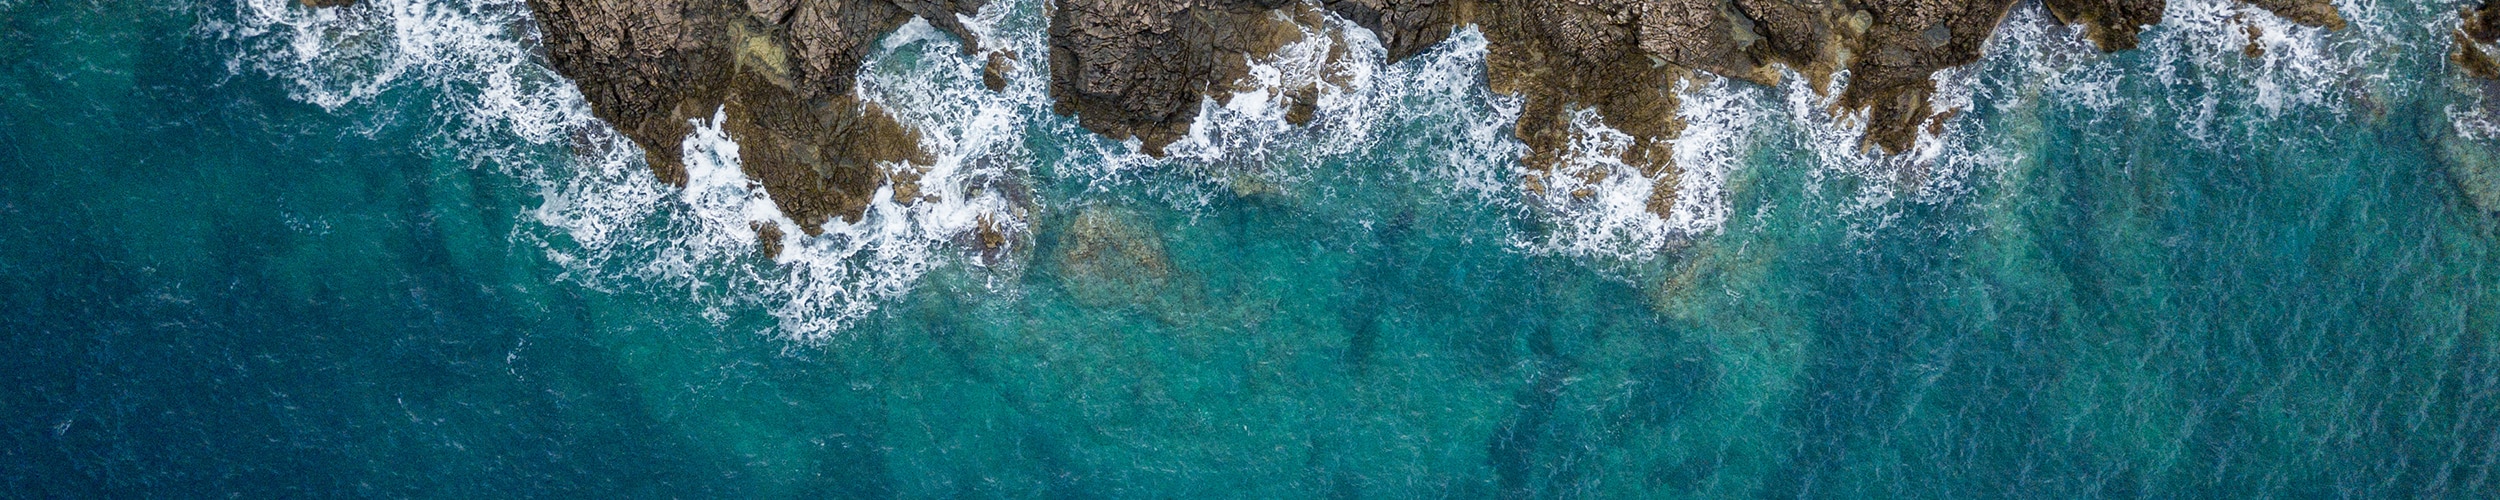 aerial view of a rocky shoreline